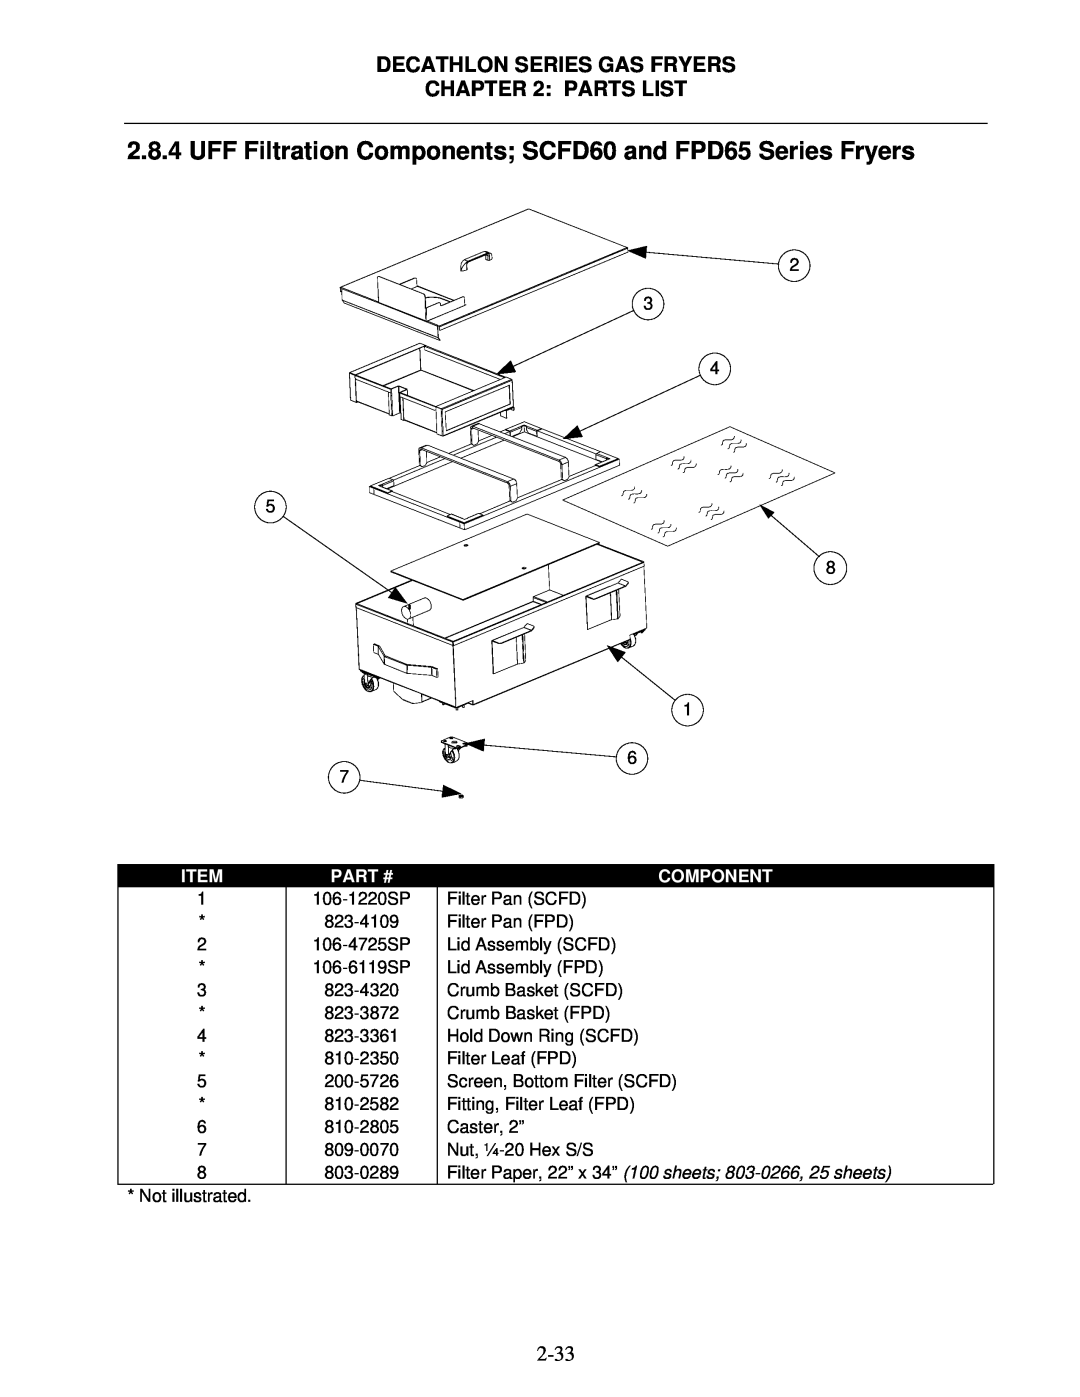 Frymaster FPD manual Decathlon Series Gas Fryers : Parts List, Item, Part #, Component, 106-1220SP, Filter Pan SCFD 